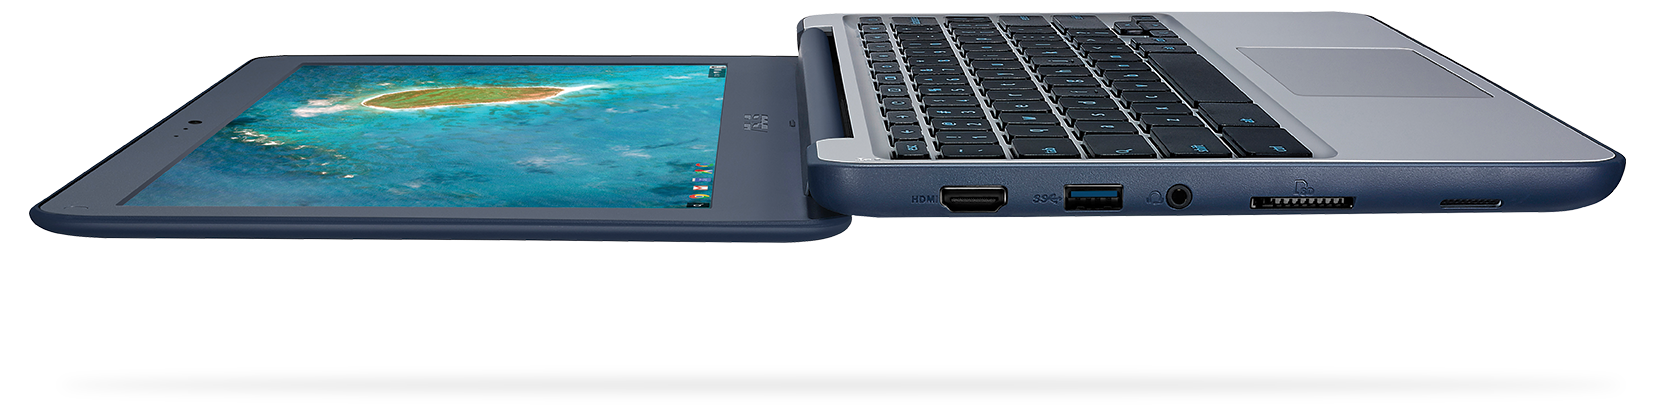 Asus Chromebook C202sa Laptops Asus Usa